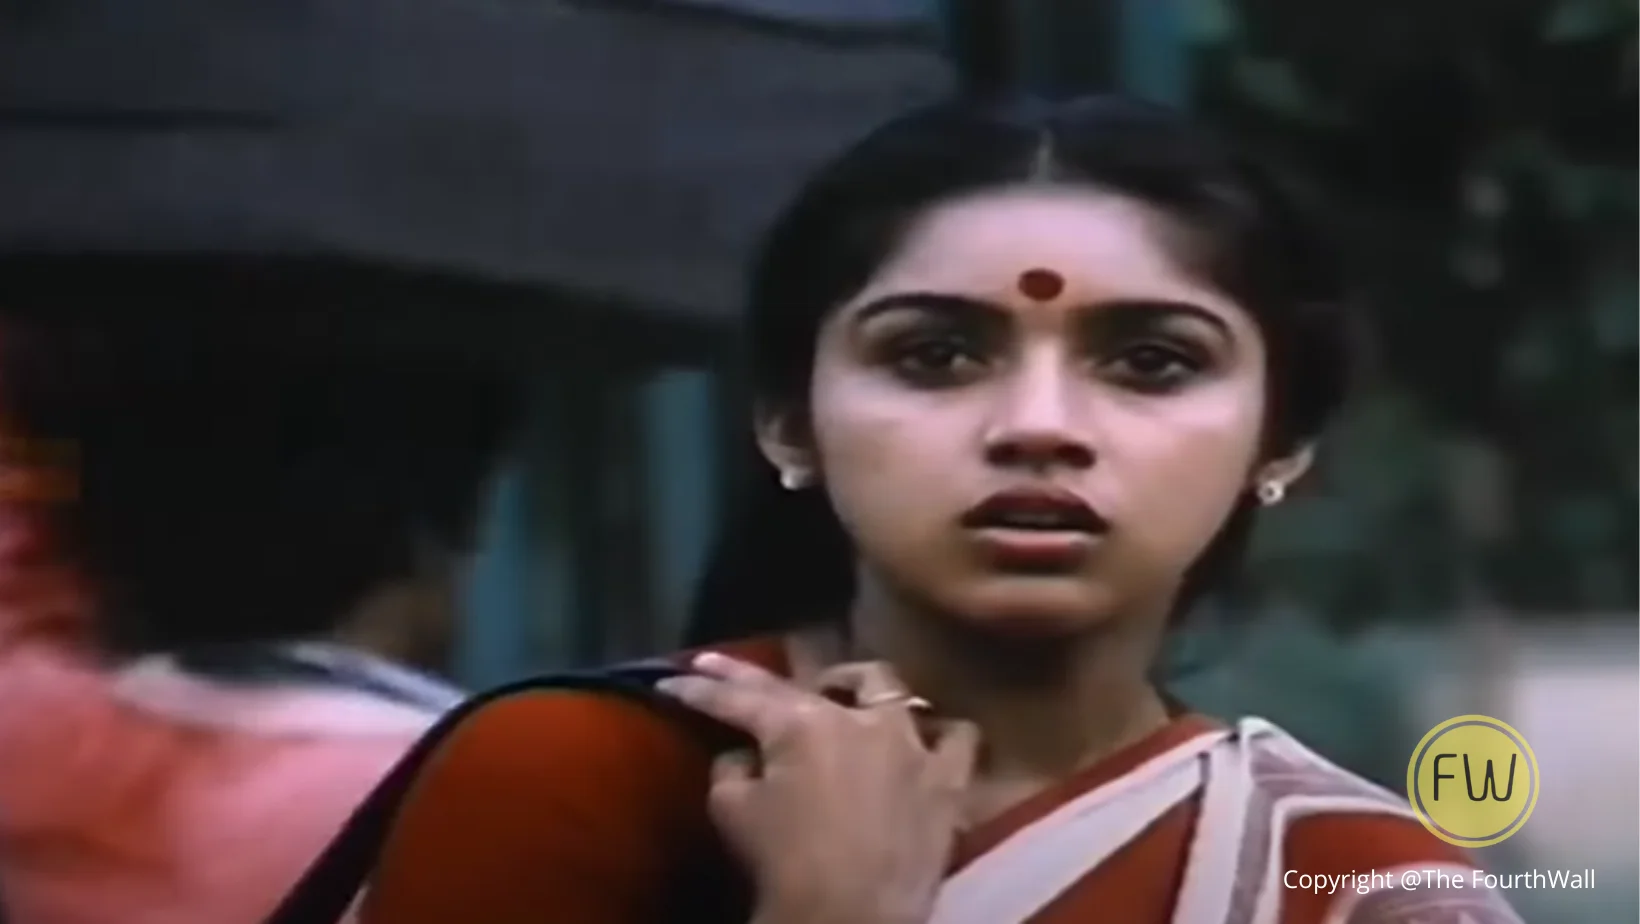 Mouna Ragam Tamil Film Revathy